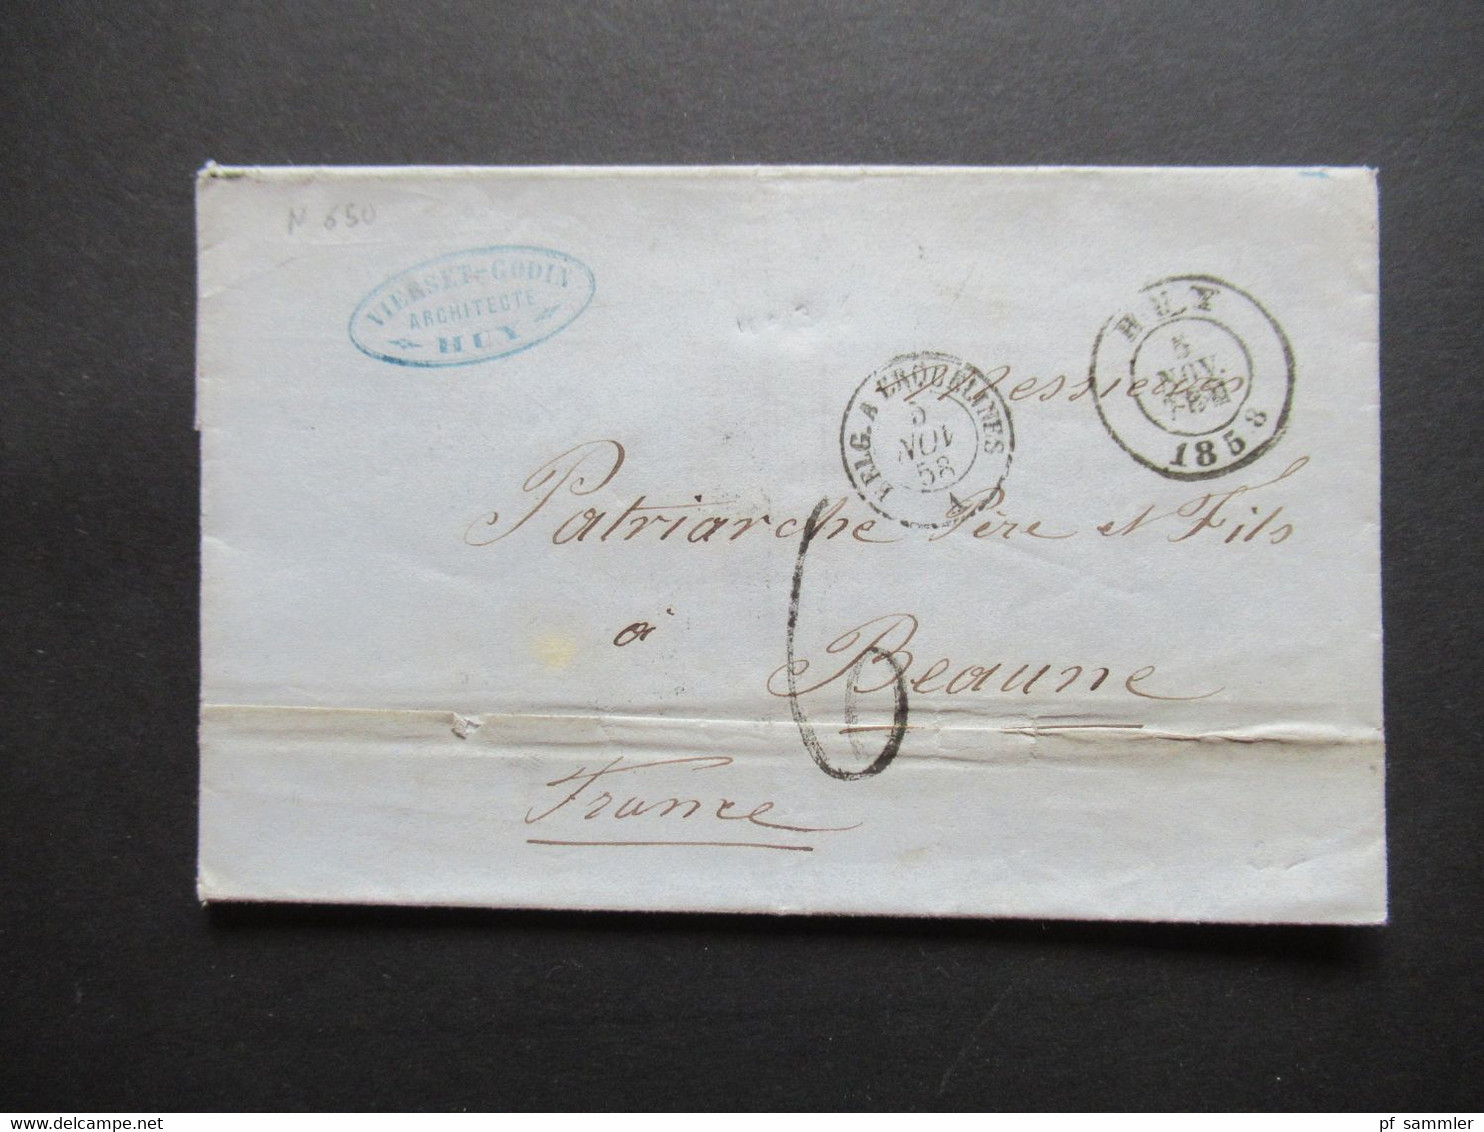 Belgien 1858 Auslands Faltbrief Mit Inhalt Huy - Beaume K2 Belg.A Erquelines A Und Taxstempel / Architecte Vierset Godin - 1849-1865 Medaillons (Varia)